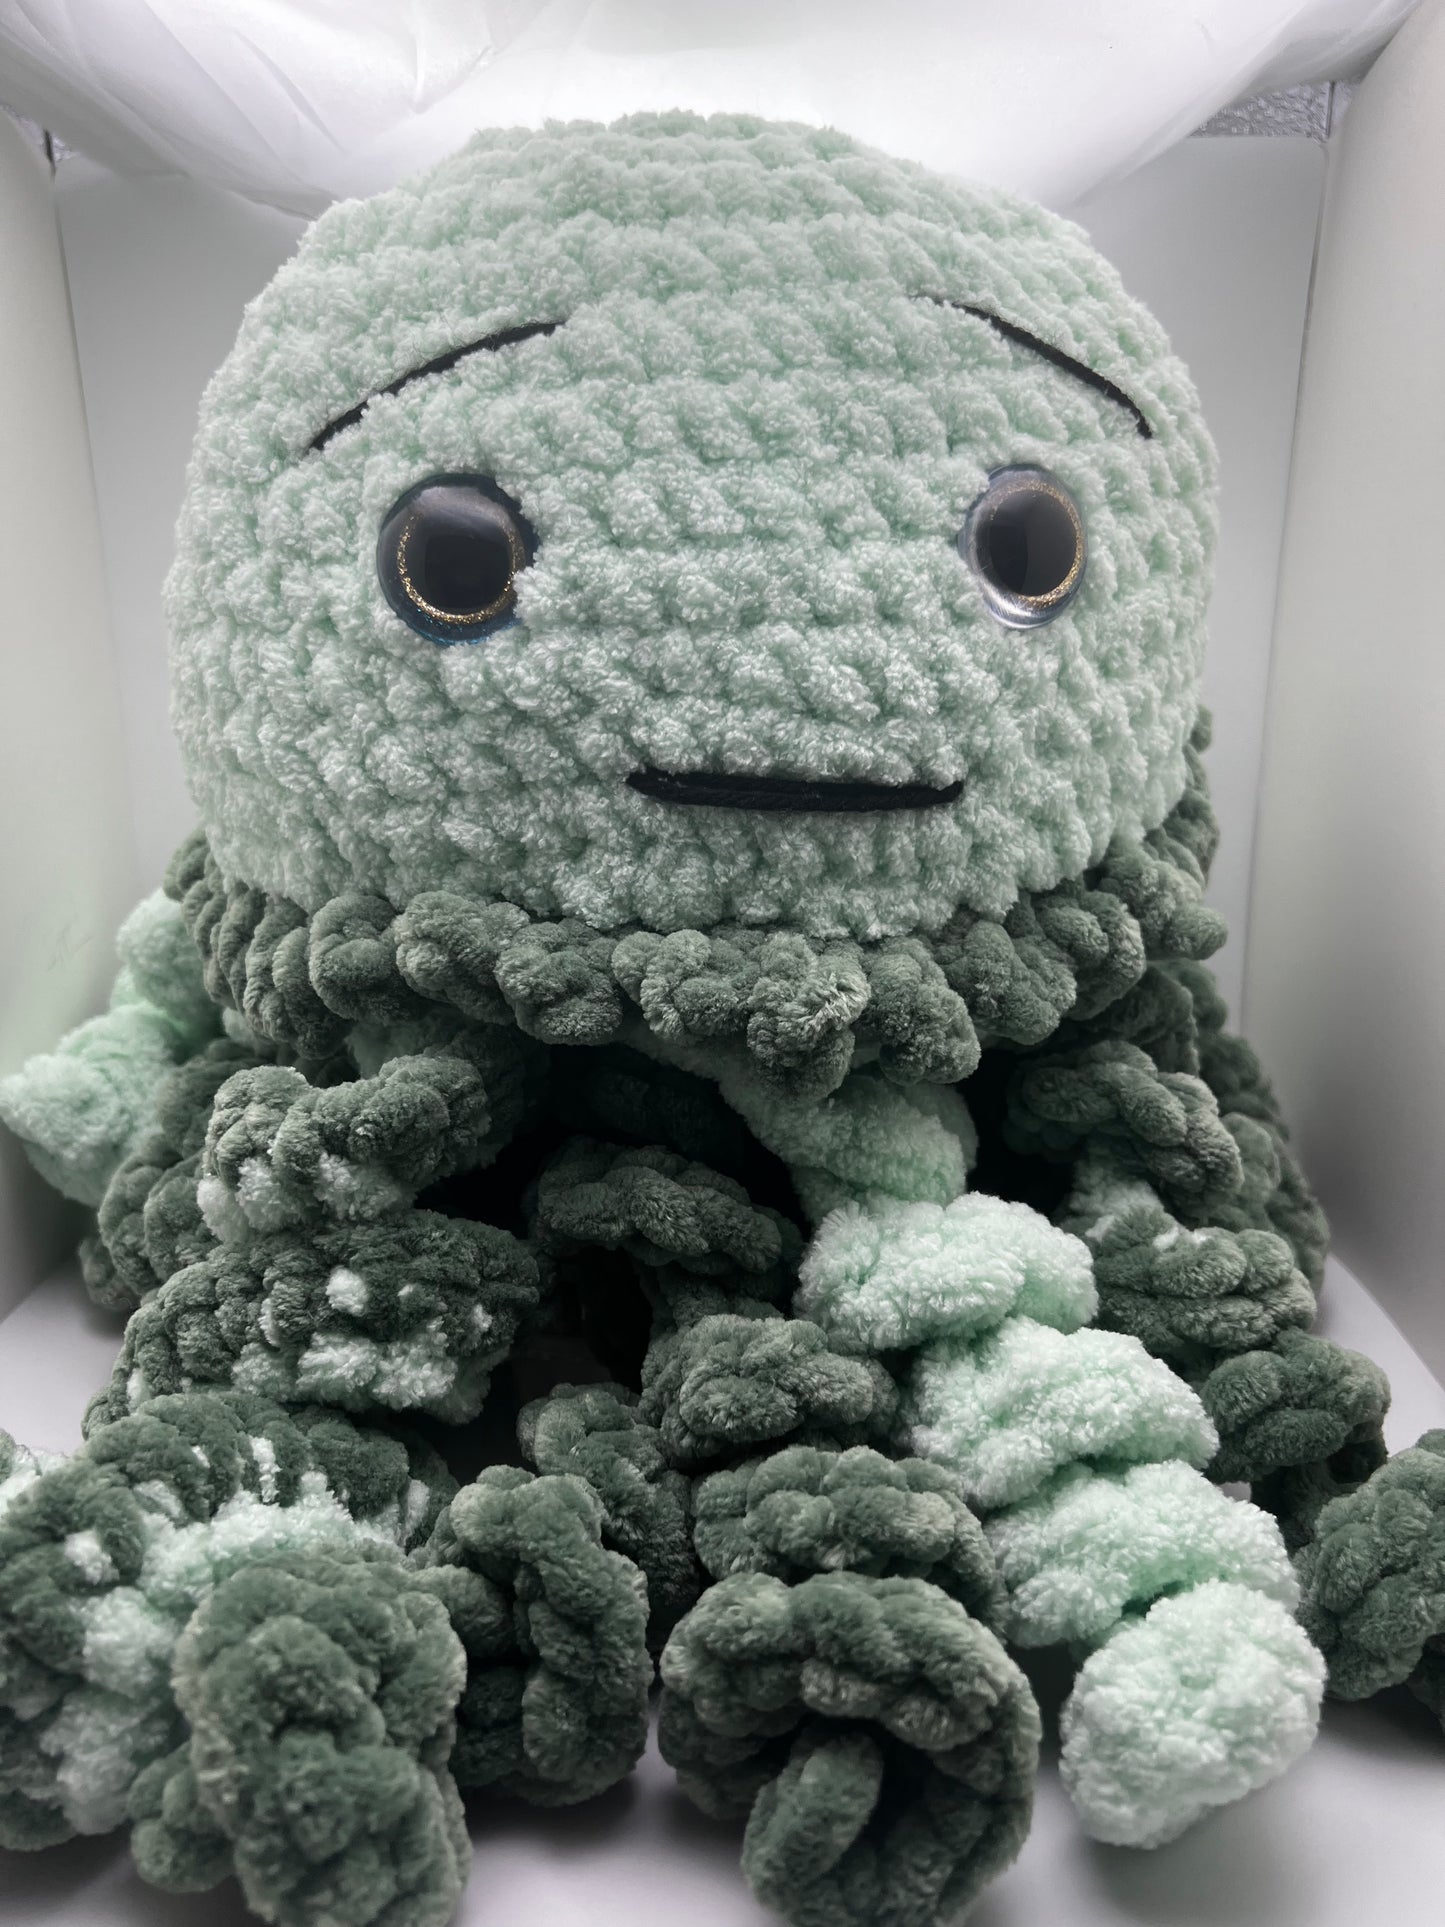 Stuffed Plushy Big Jellyfish - Crochet Amigurumi Toy (Different Colors Available)